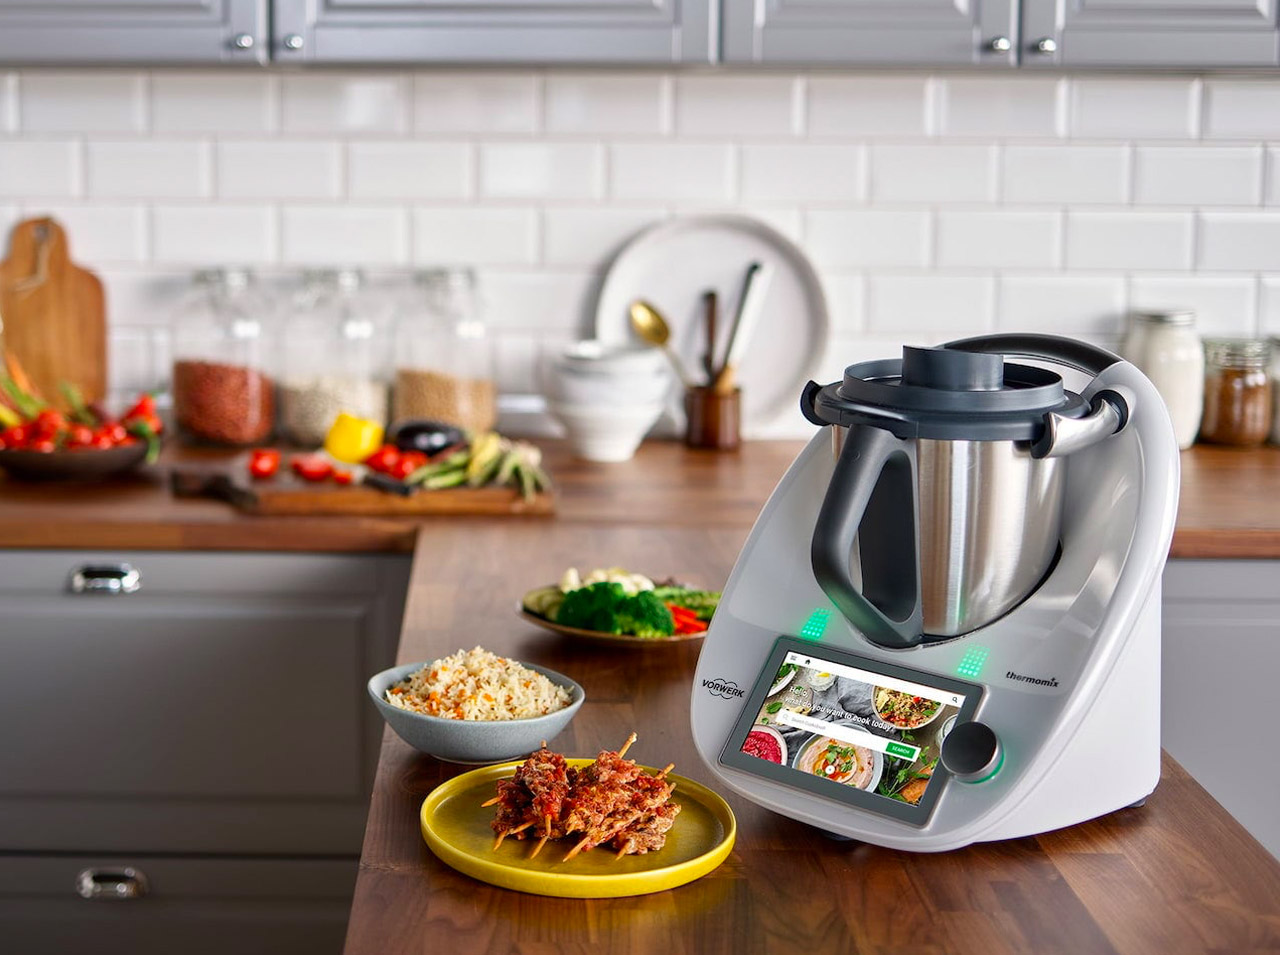 https://www.yankodesign.com/images/design_news/2021/07/smart-kitchen-appliances/smart_kitchen_appliance_ds_yanko_design-14.jpg